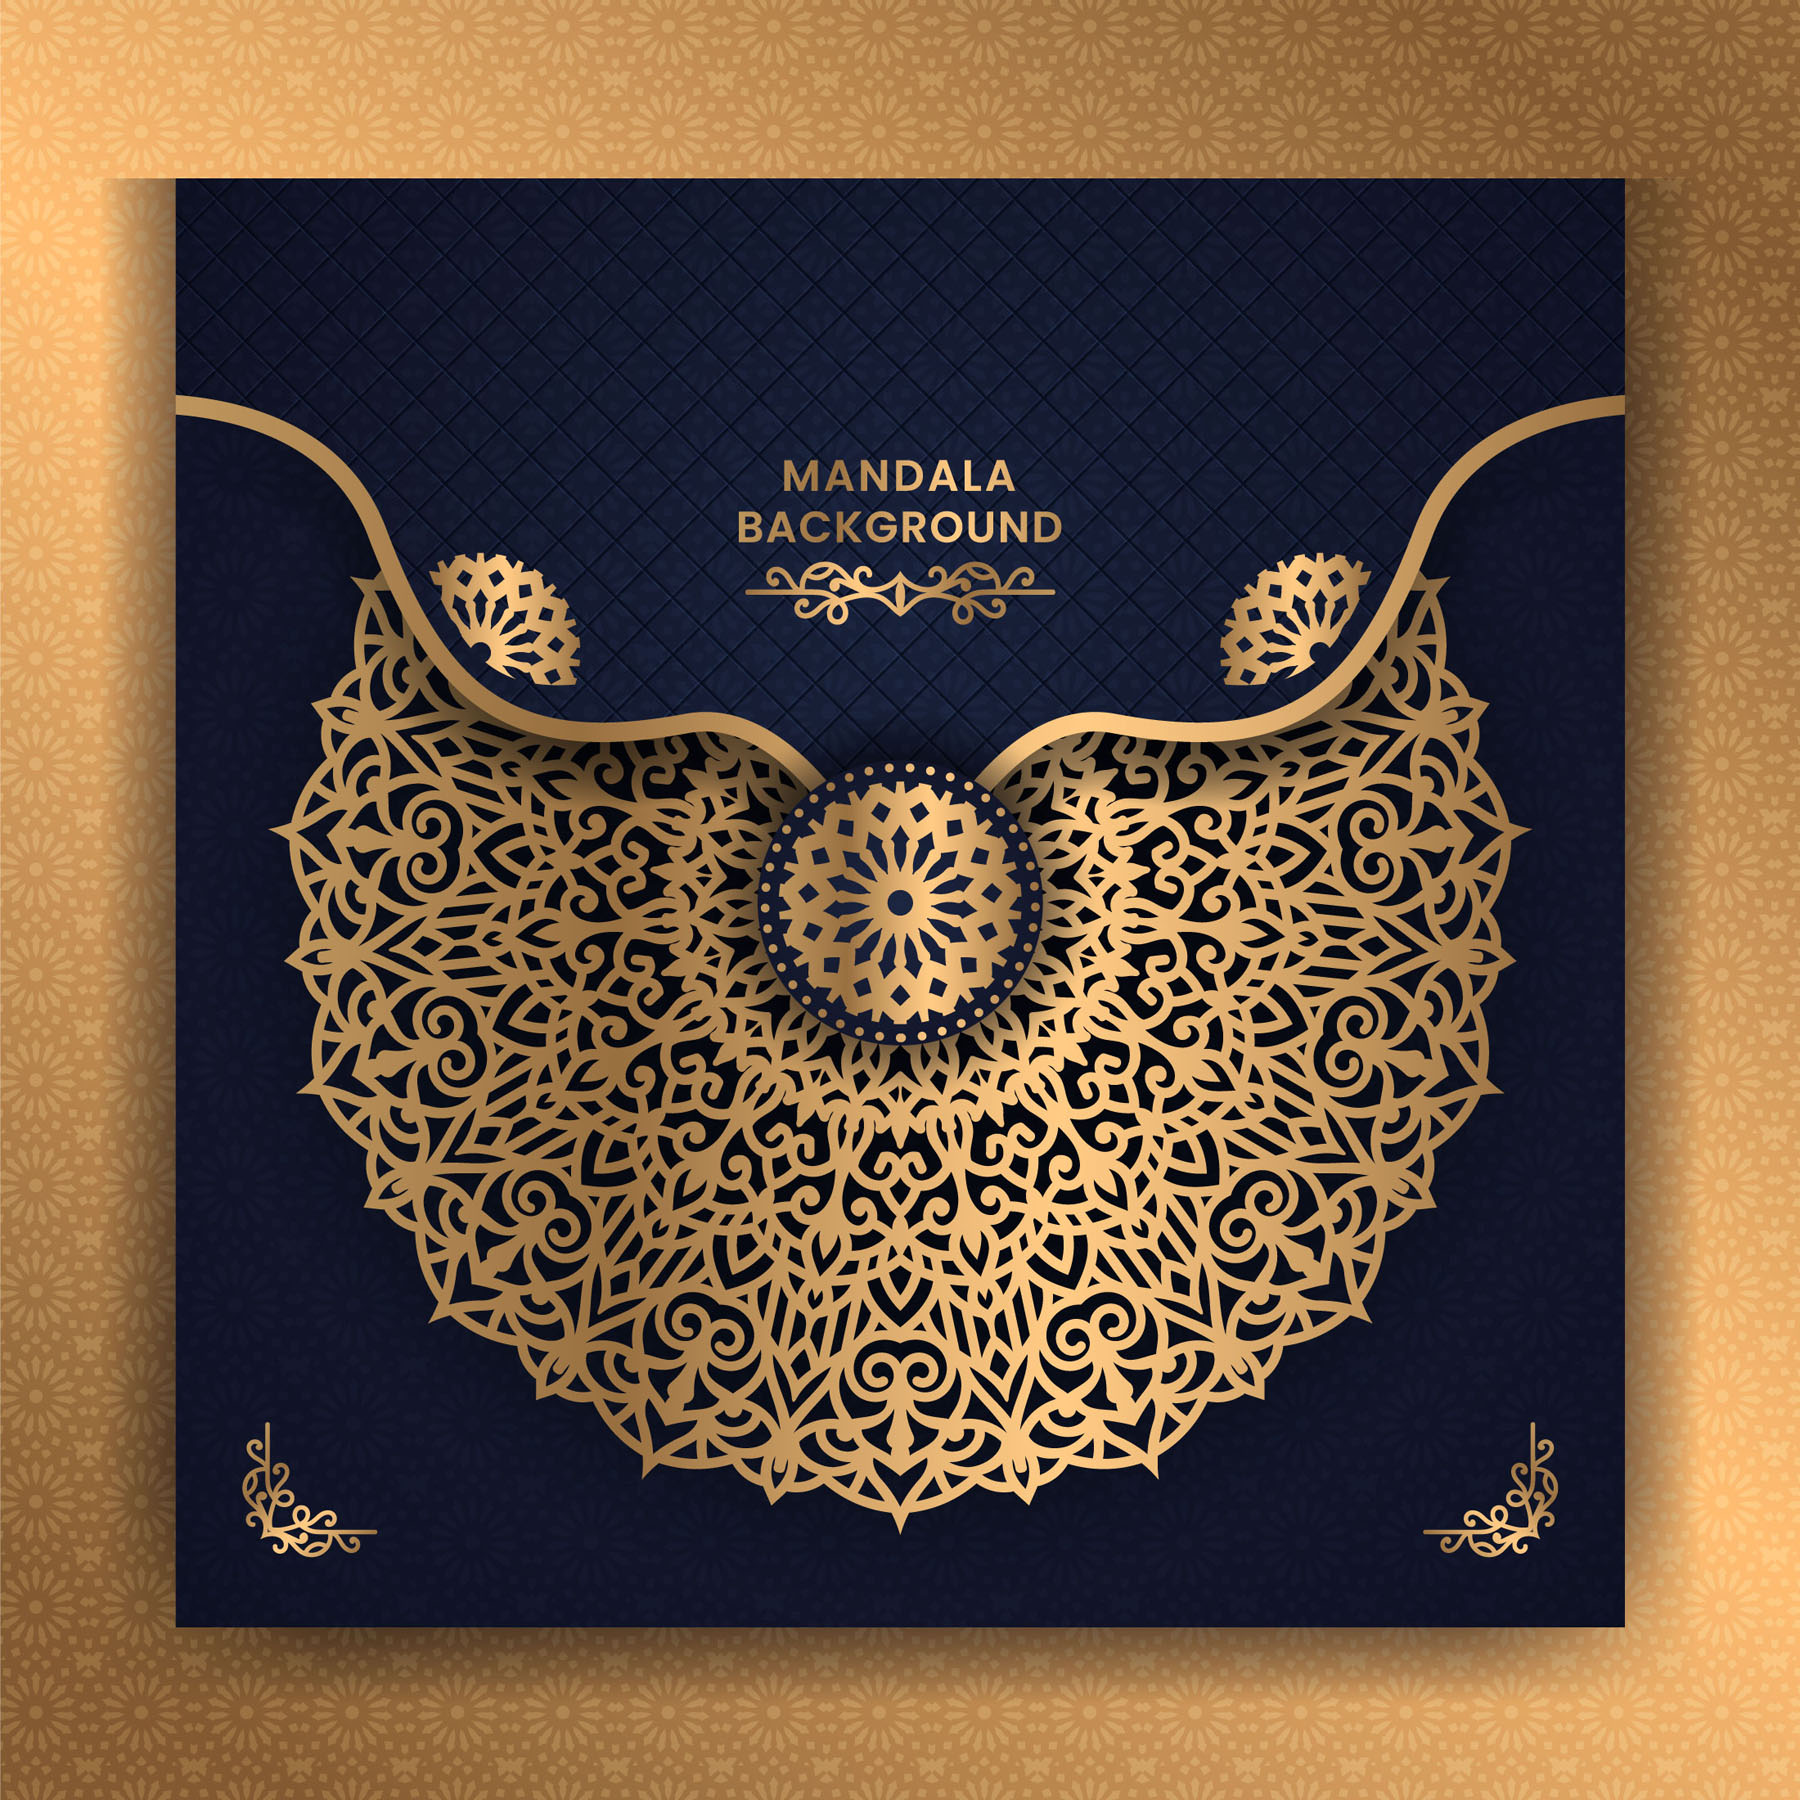 Mandala Luxury Background Design preview image.